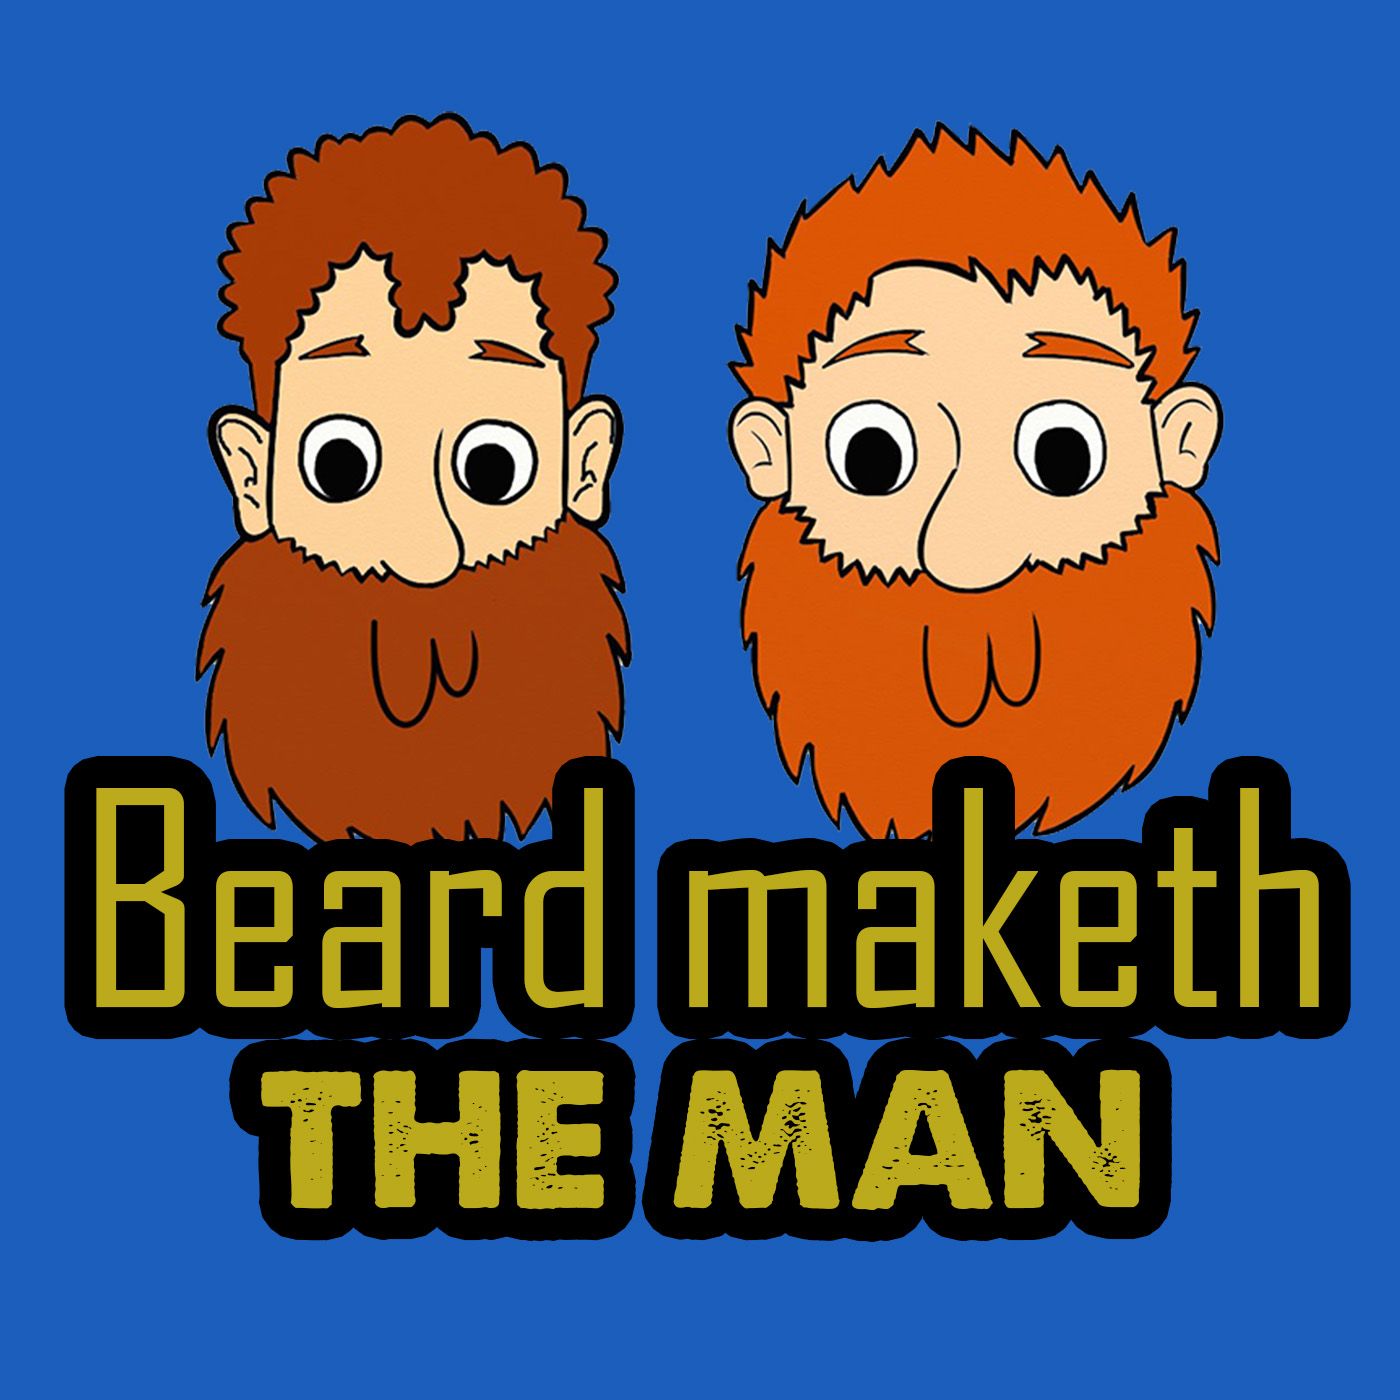 Beard maketh the man